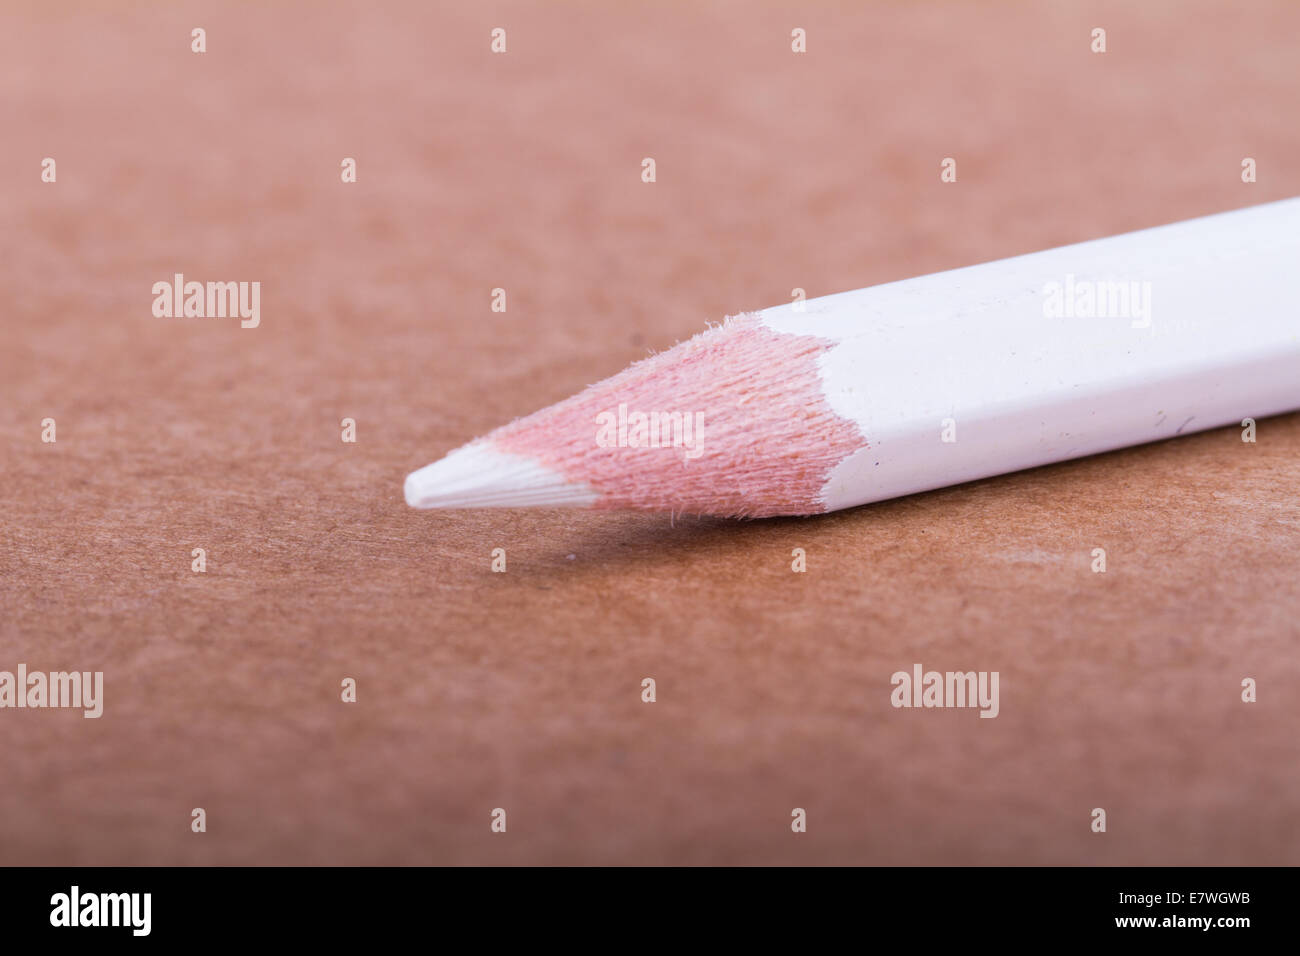 White pencil on textured background. Stock Photo